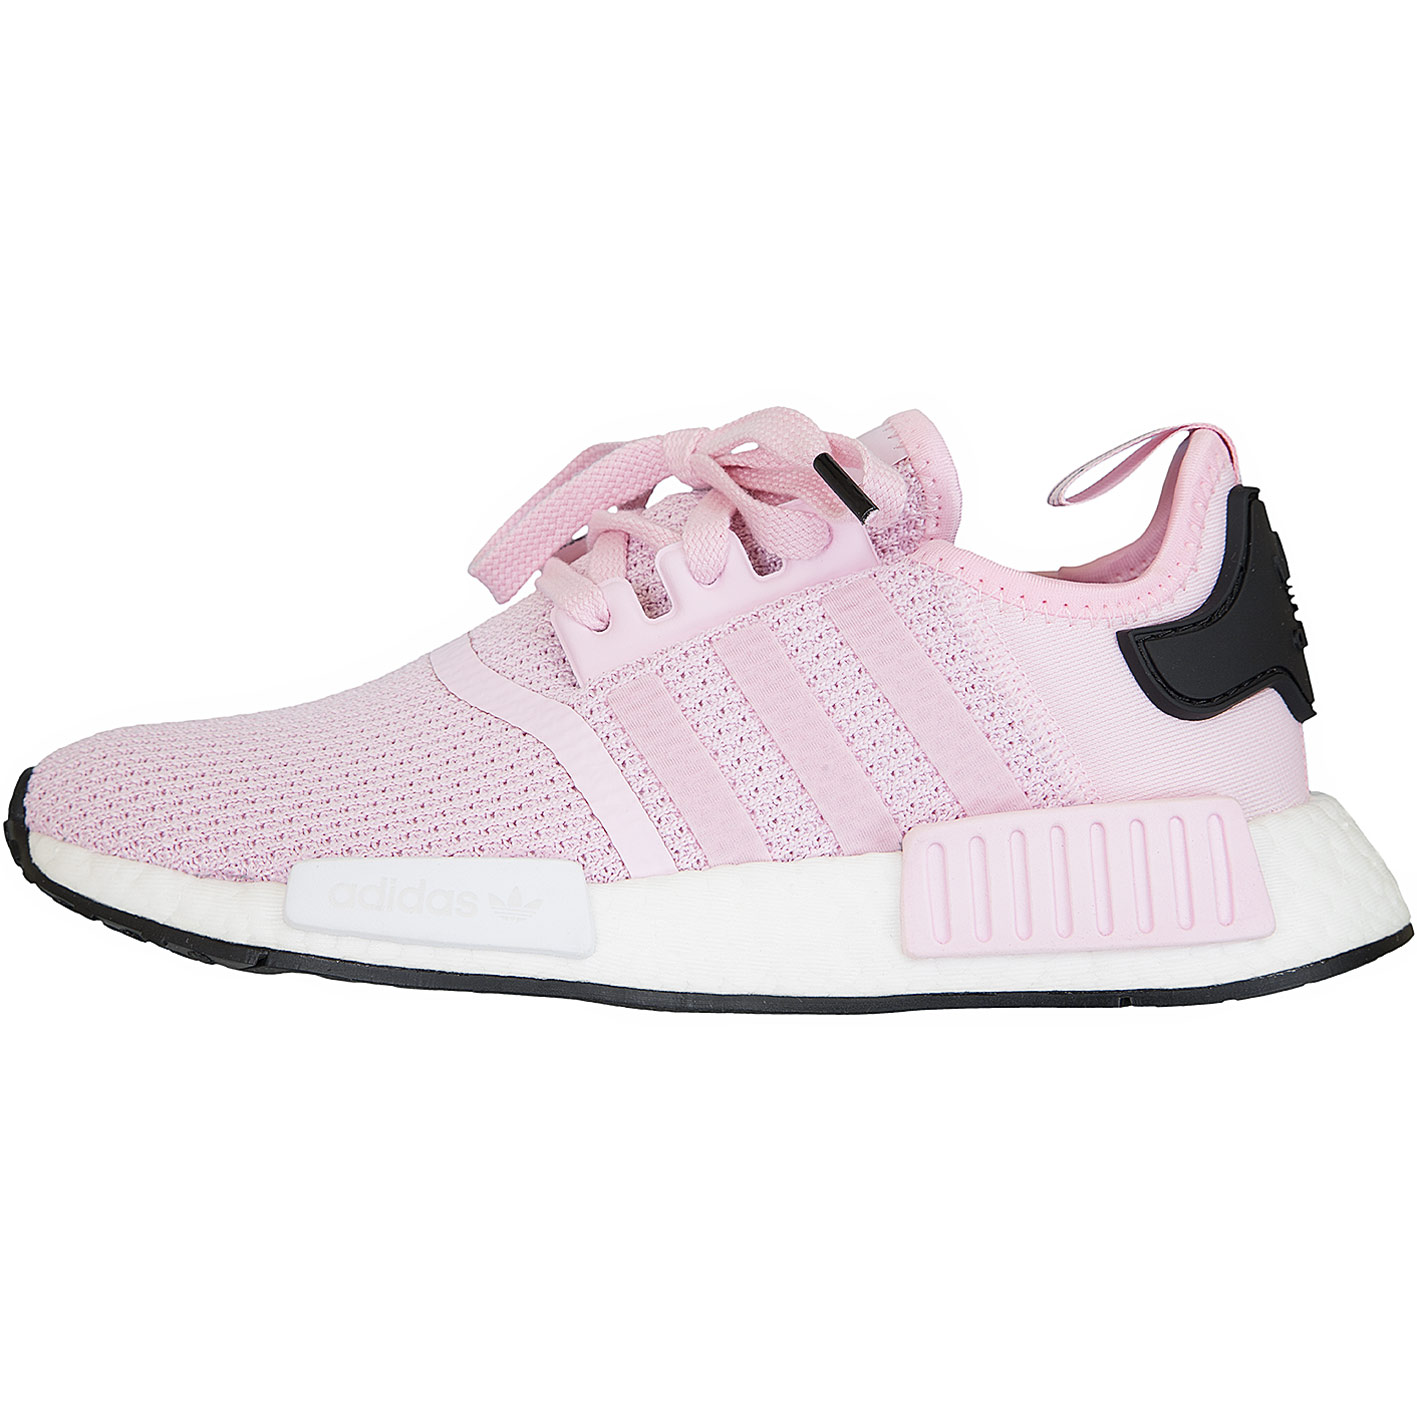 Adidas Originals Damen Sneaker NMD R1 pink hier bestellen 